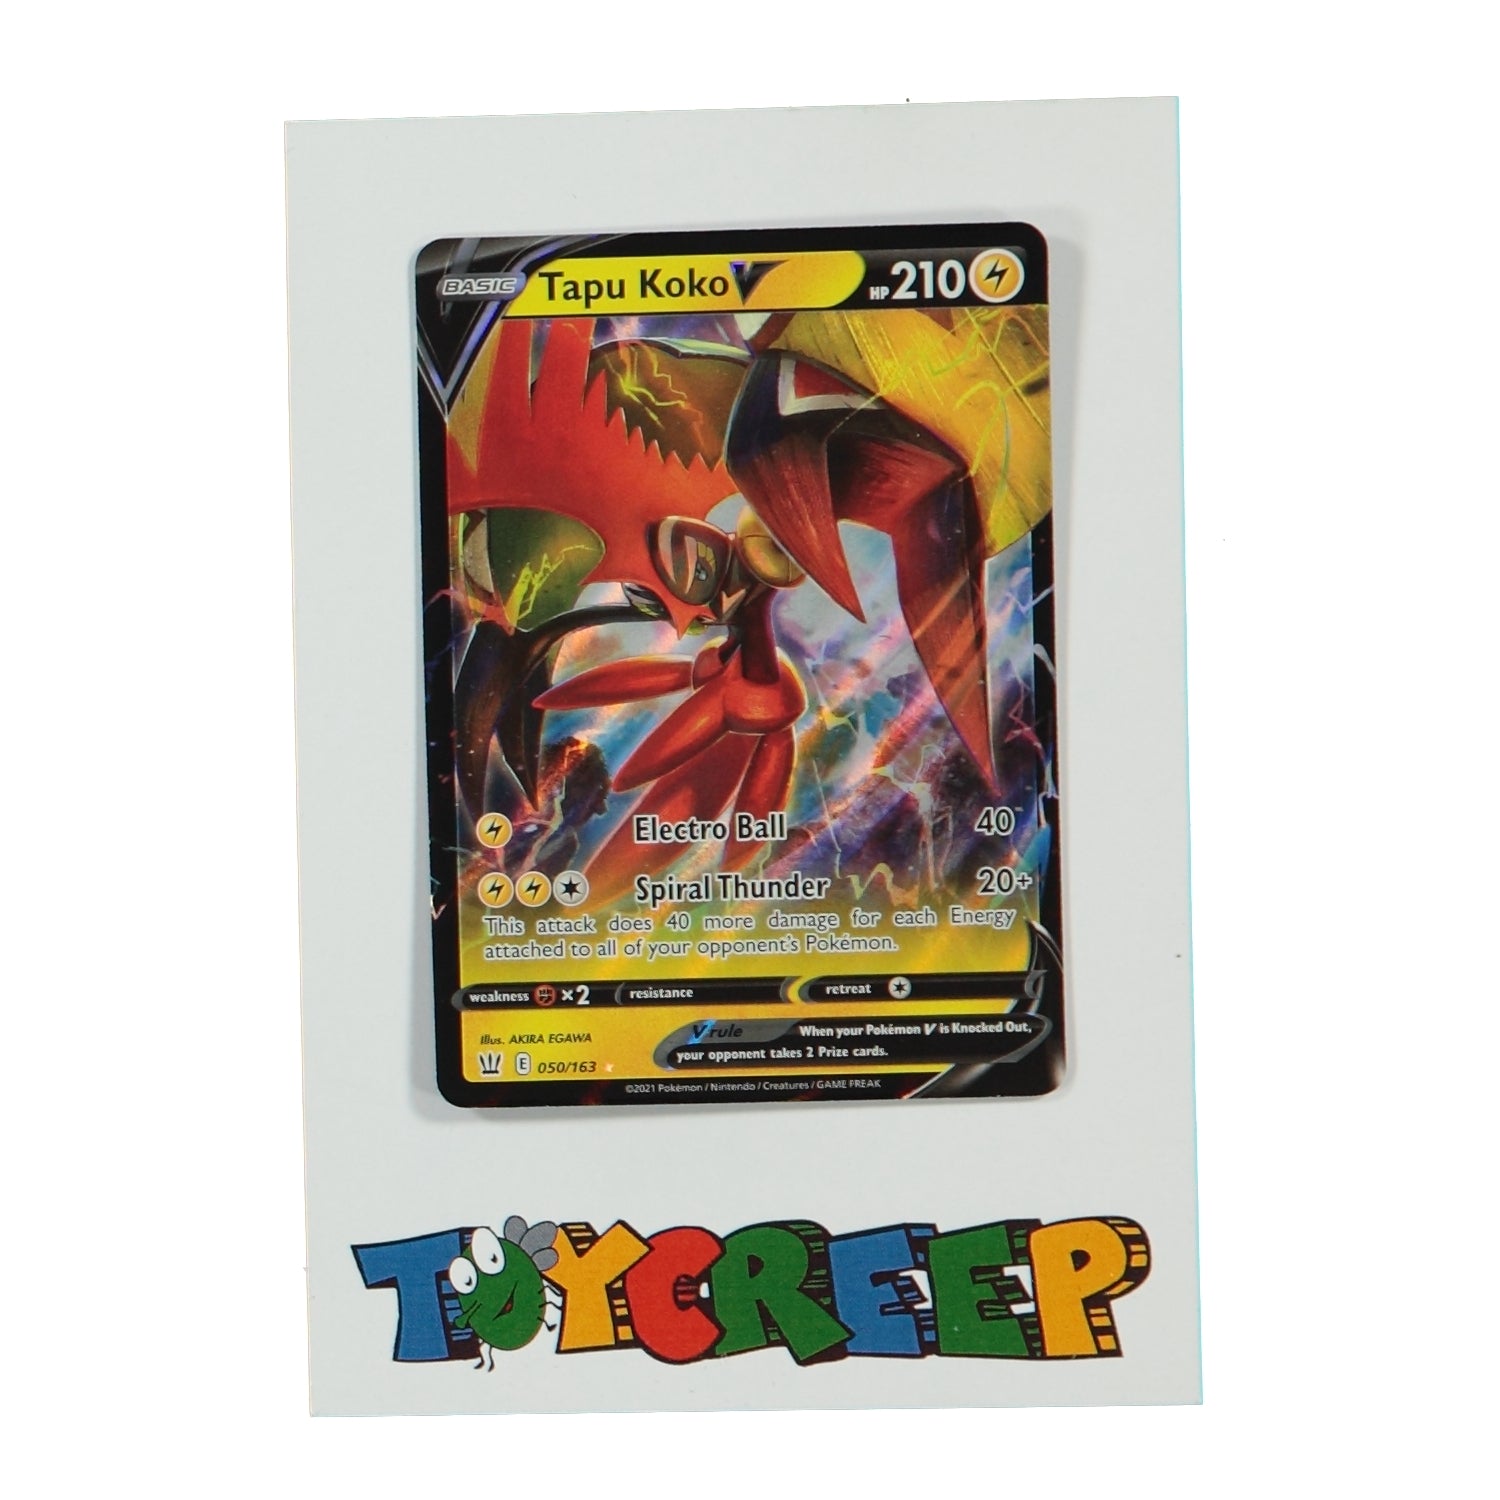 Tapu Koko VMAX 051/163 Pokemon TCG Battle Styles Full A